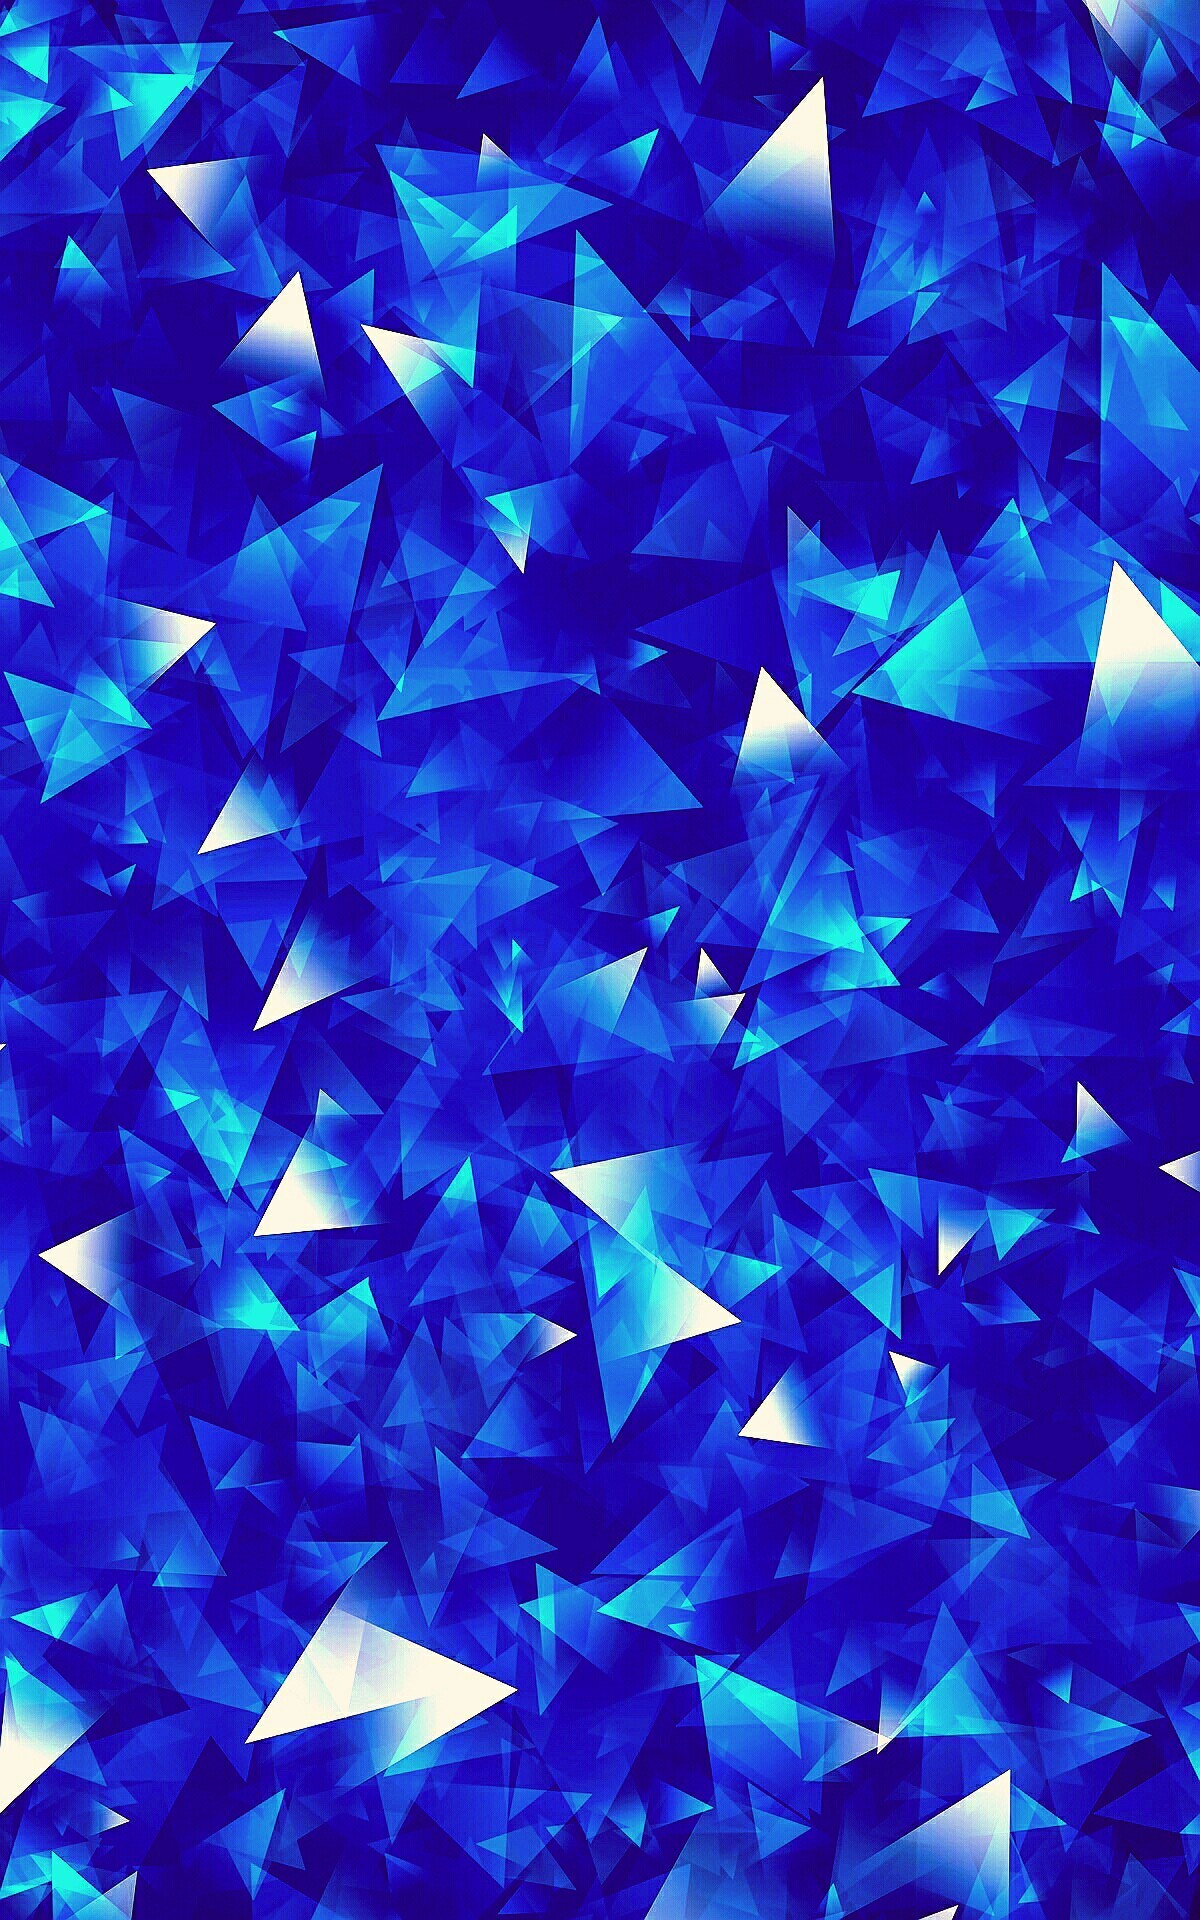 Royal Blue Backgrounds (43+ images)